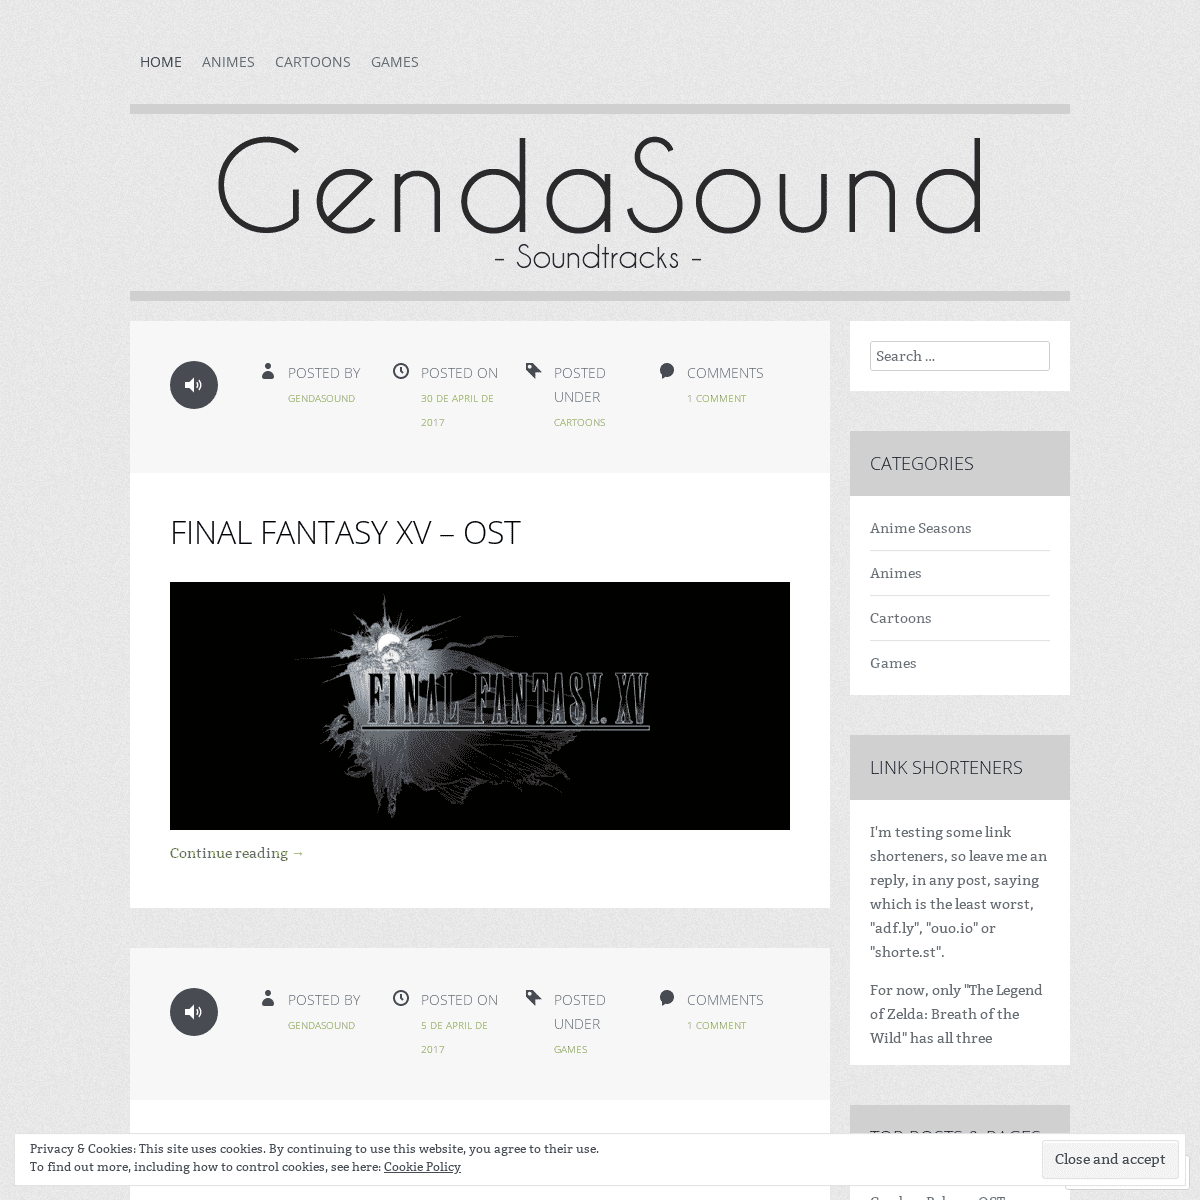 GendaSound | Anime, Games and Cartons Soundtracks